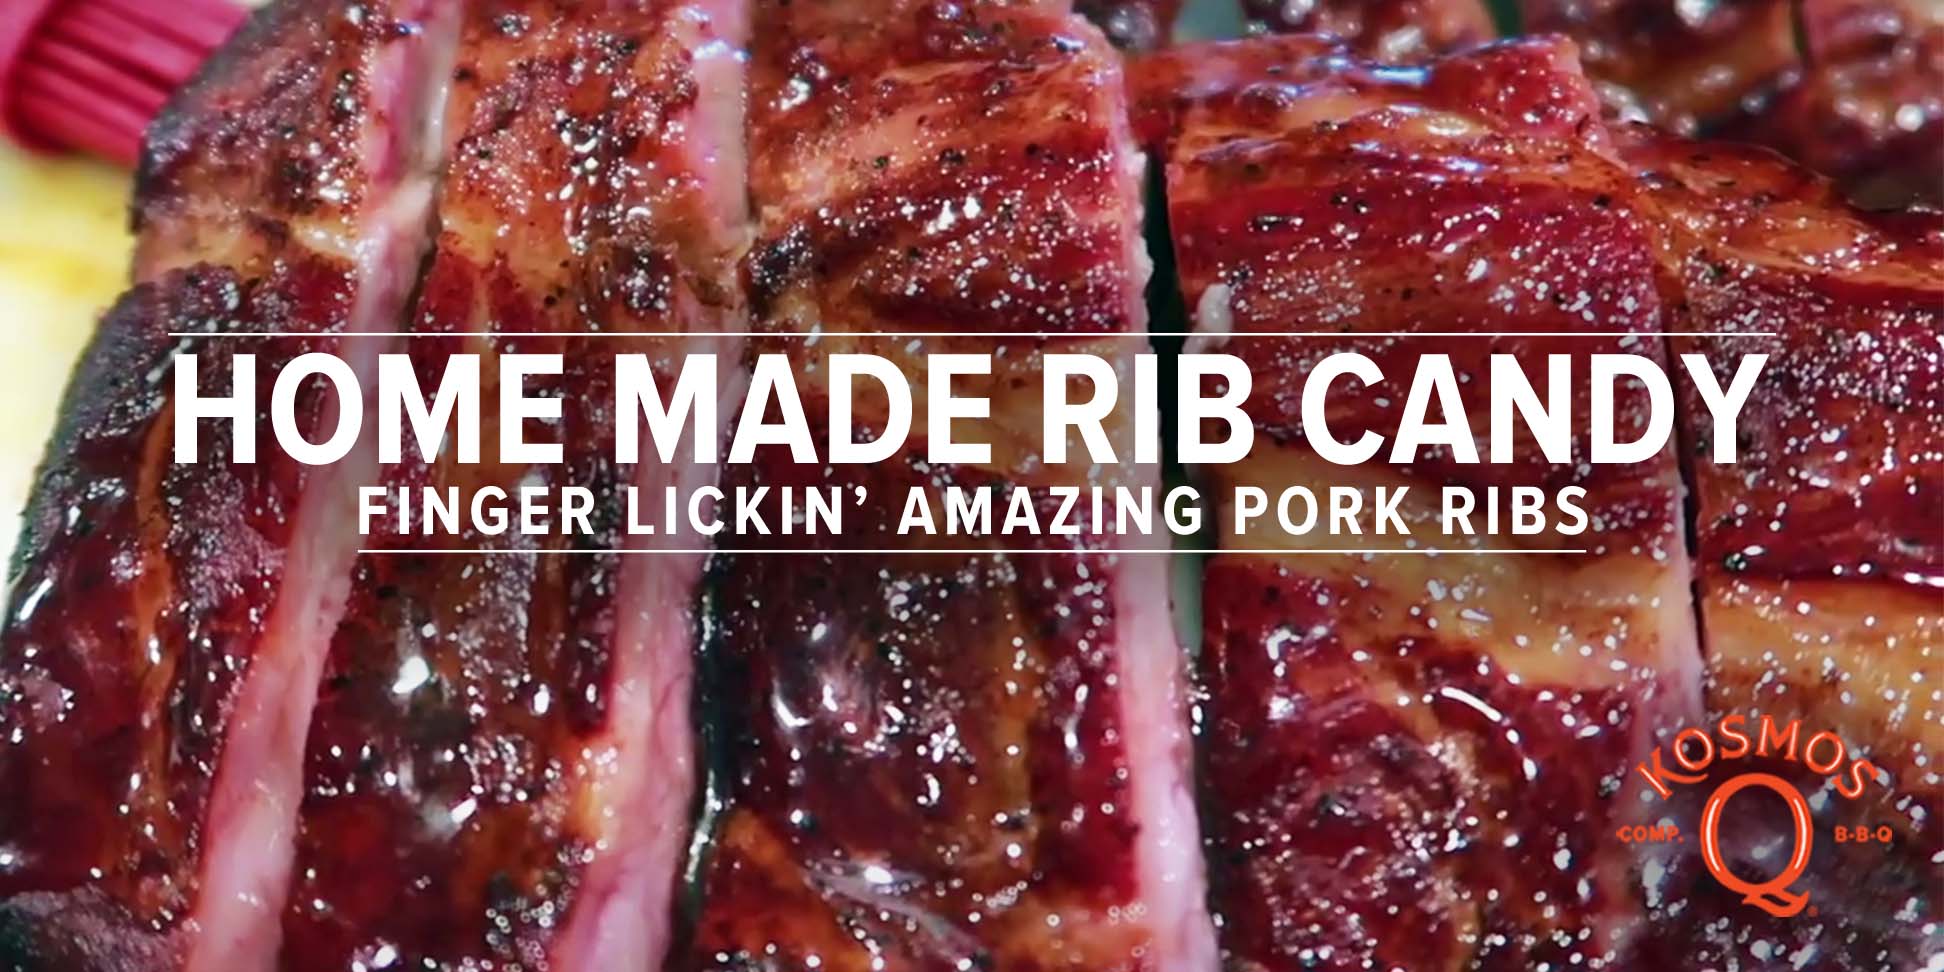 Candy-Glazed Pork Ribs: Unique Take on Ribs